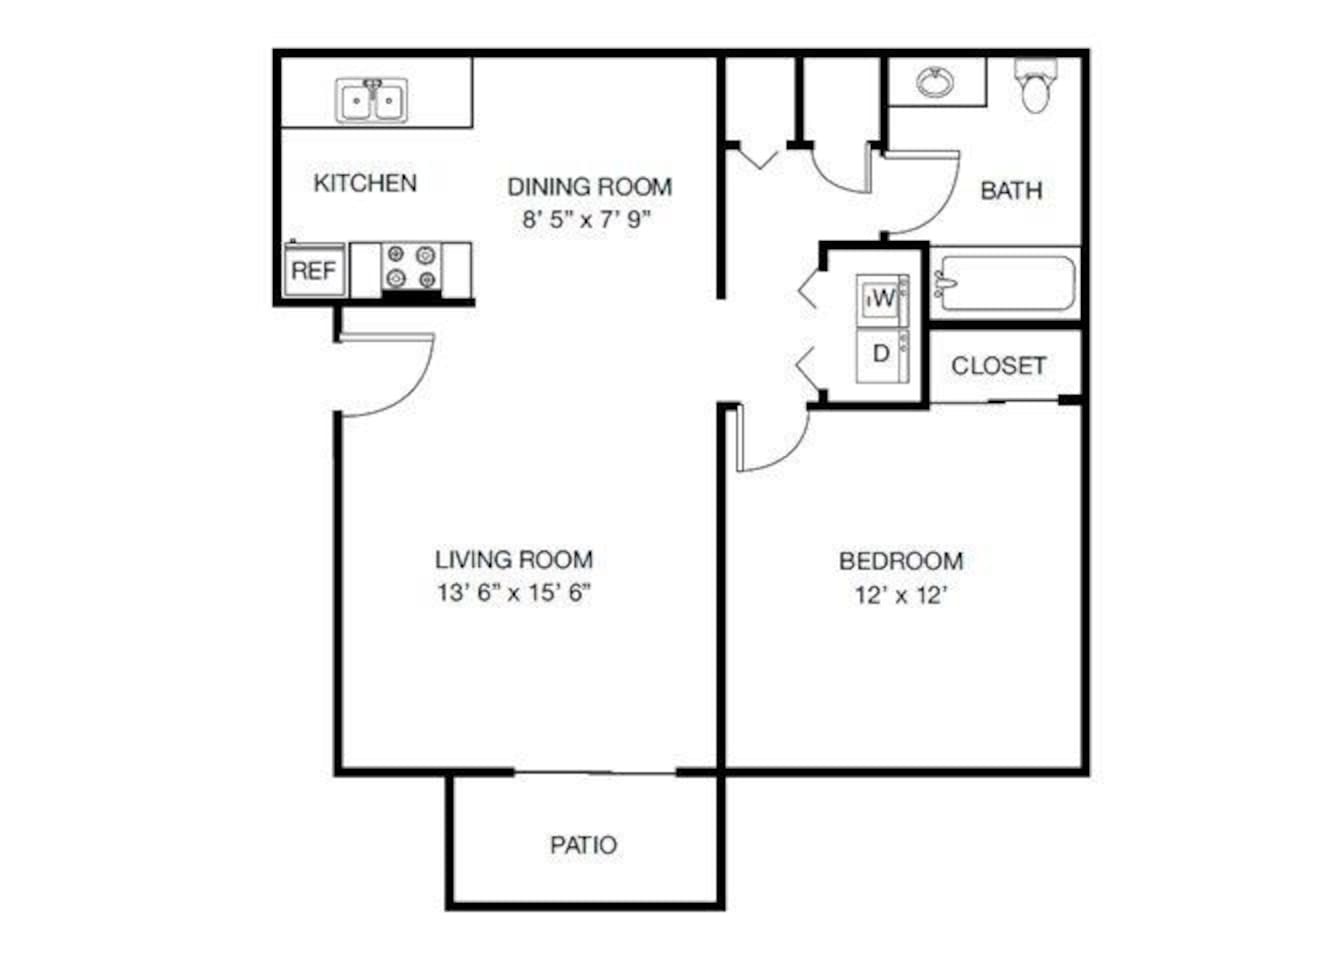 Floorplan diagram for Addison (A1), showing 1 bedroom